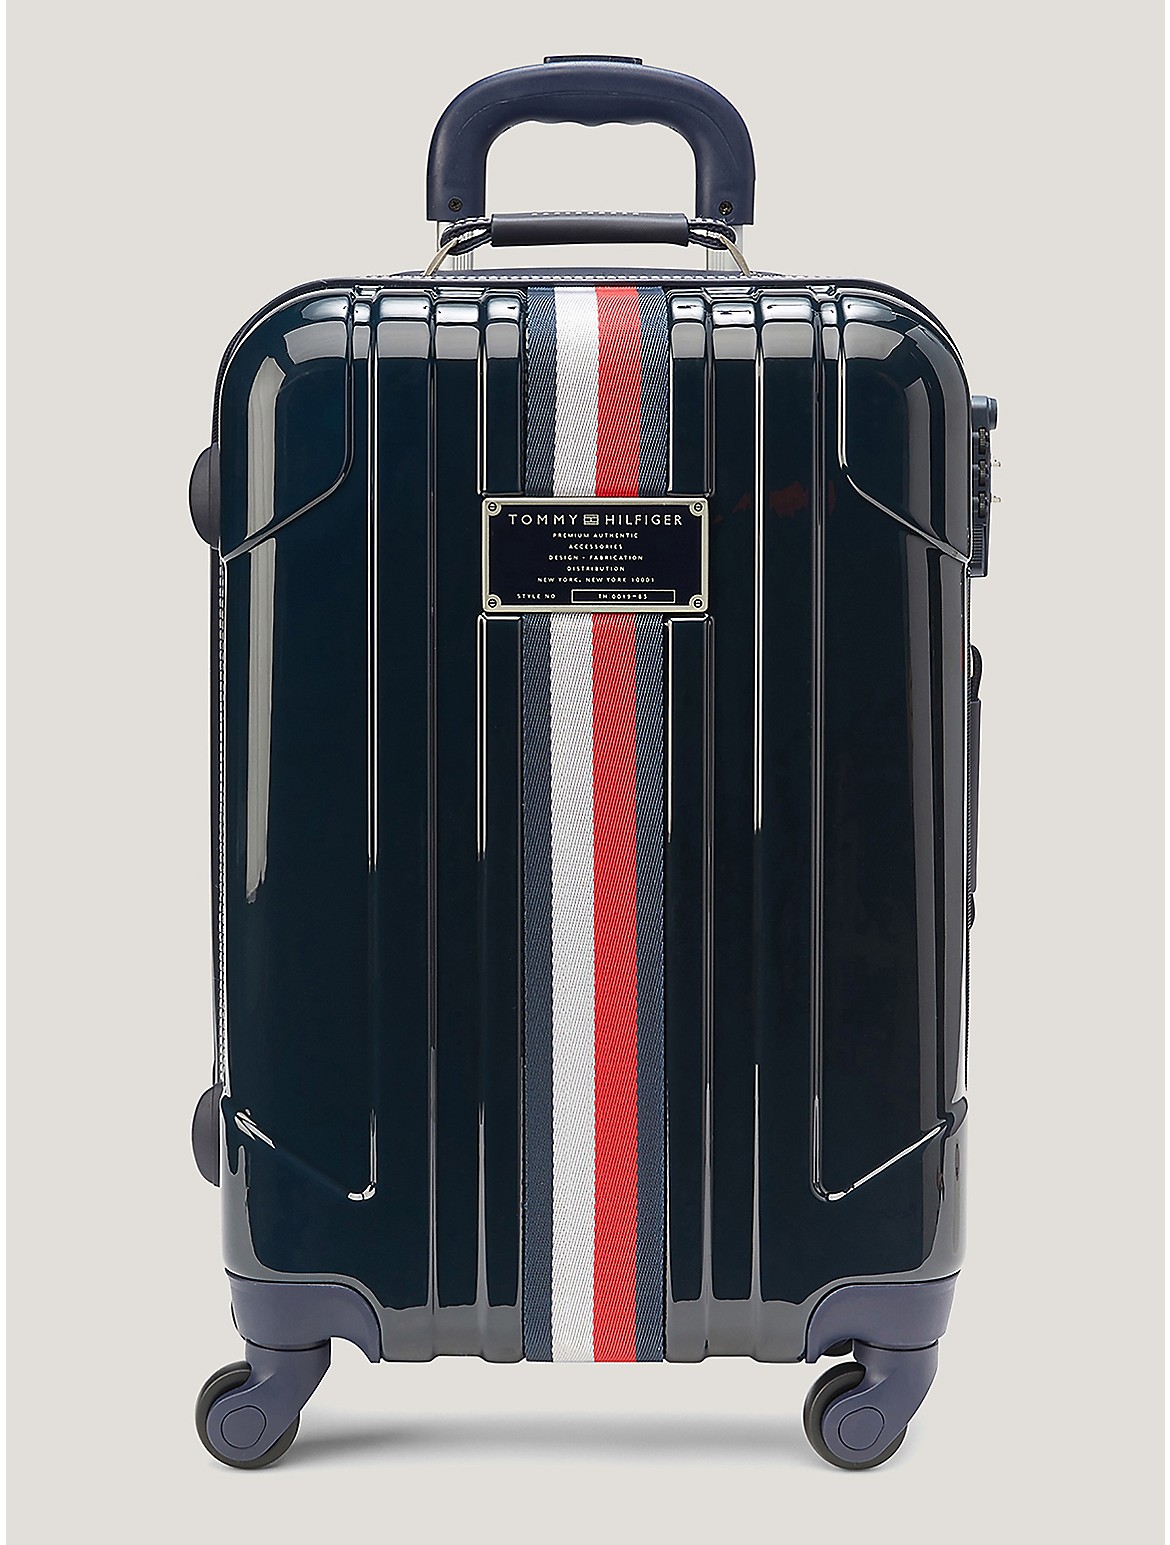 Tommy Hilfiger 21" Hardcase Spinner Suitcase In Navy